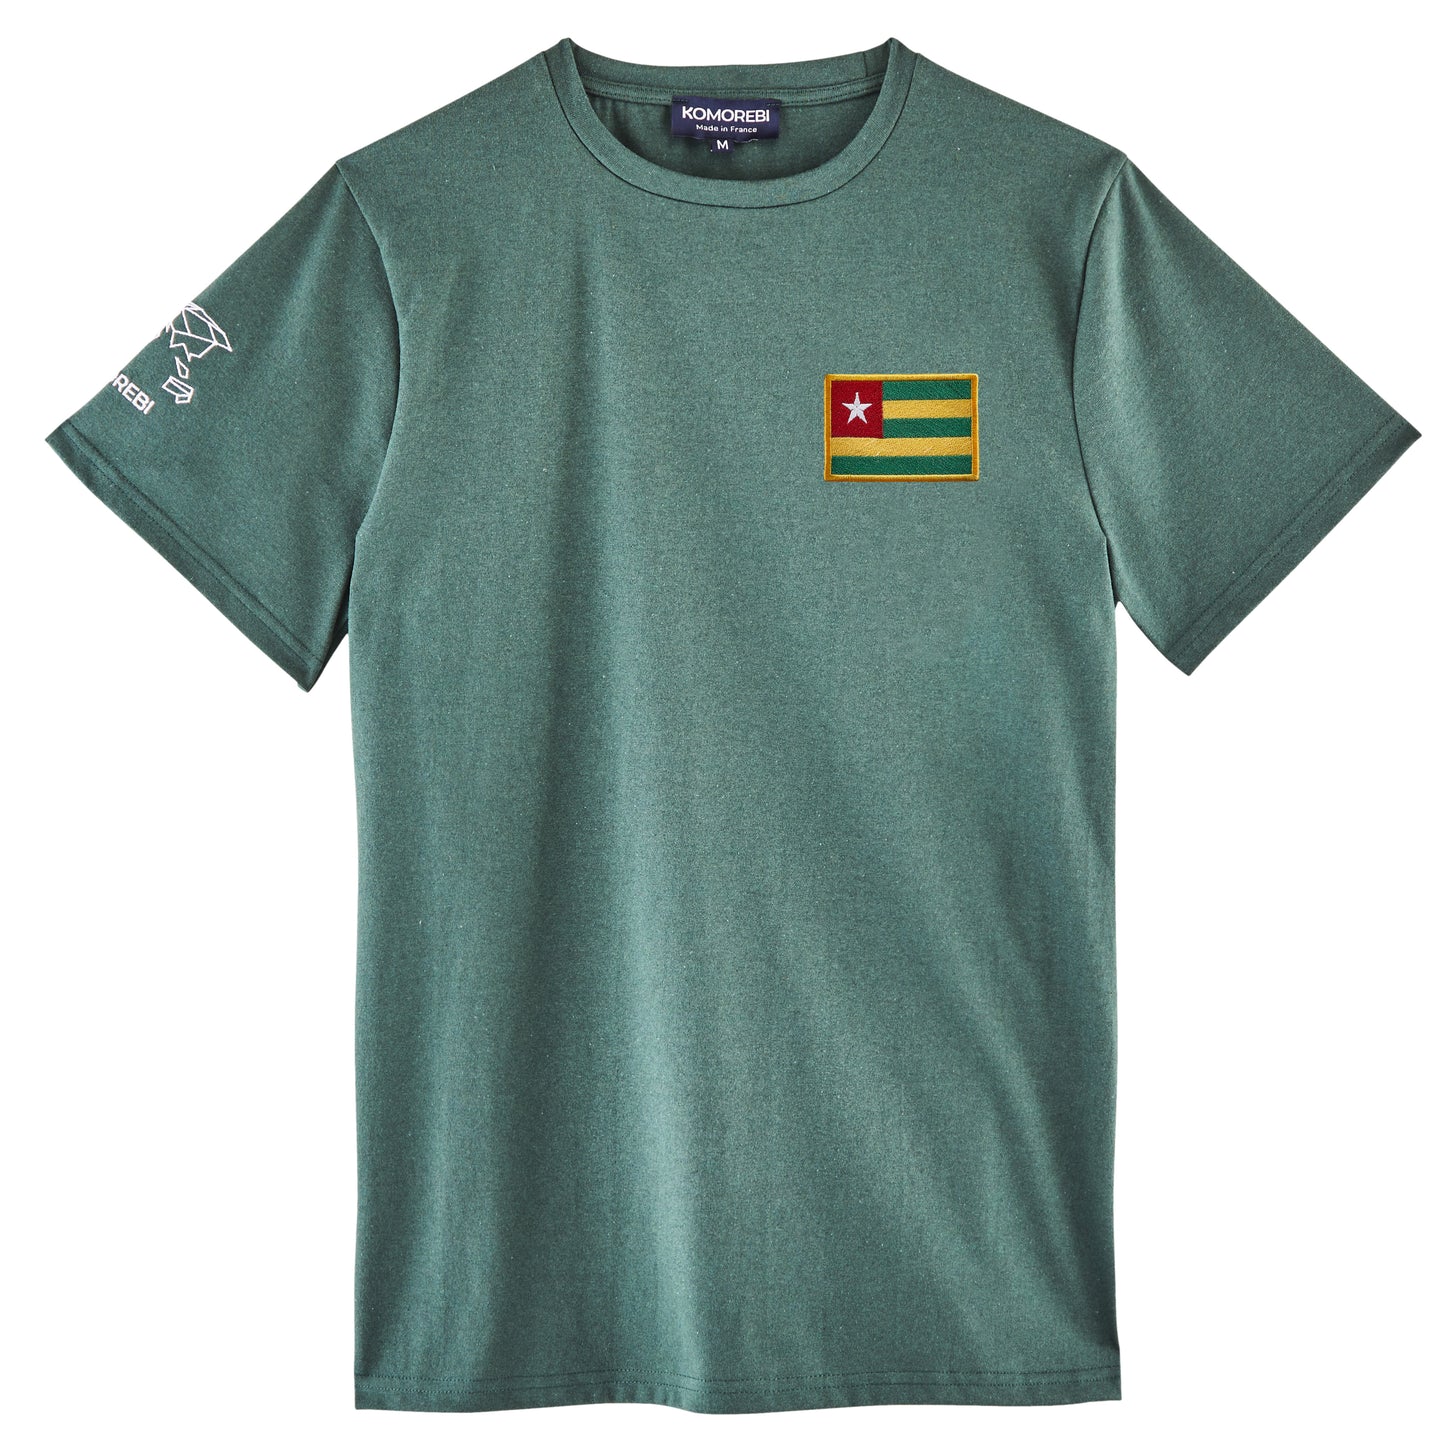 Togo - flag t-shirt